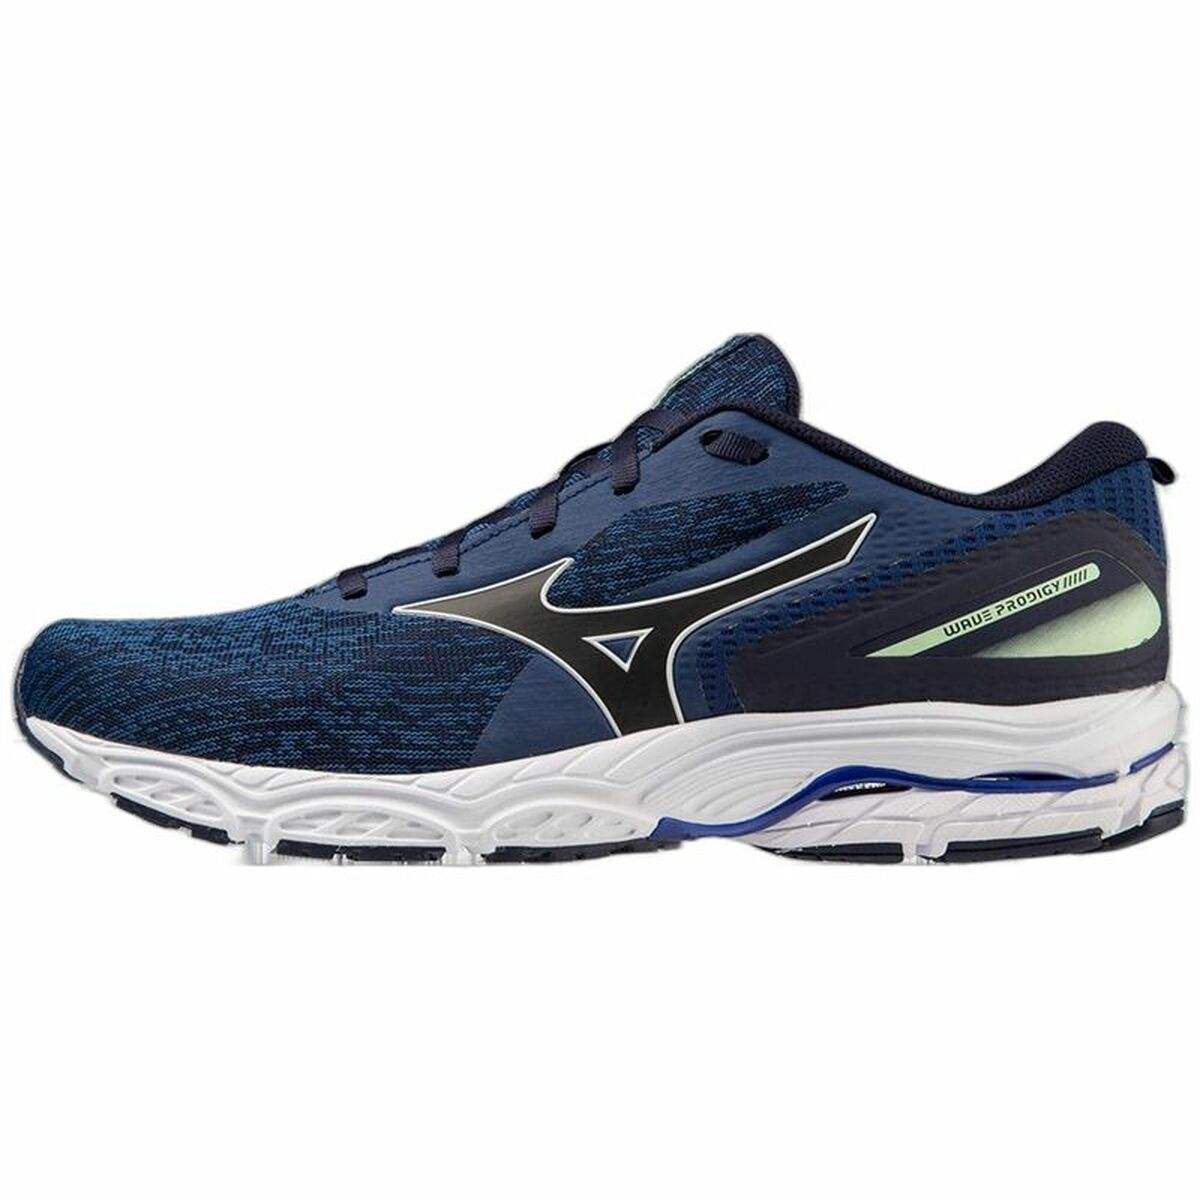 Chaussures de Running pour Adultes Mizuno Wave Prodigy 5 Bleu Homme - Mizuno - Jardin D'Eyden - jardindeyden.fr